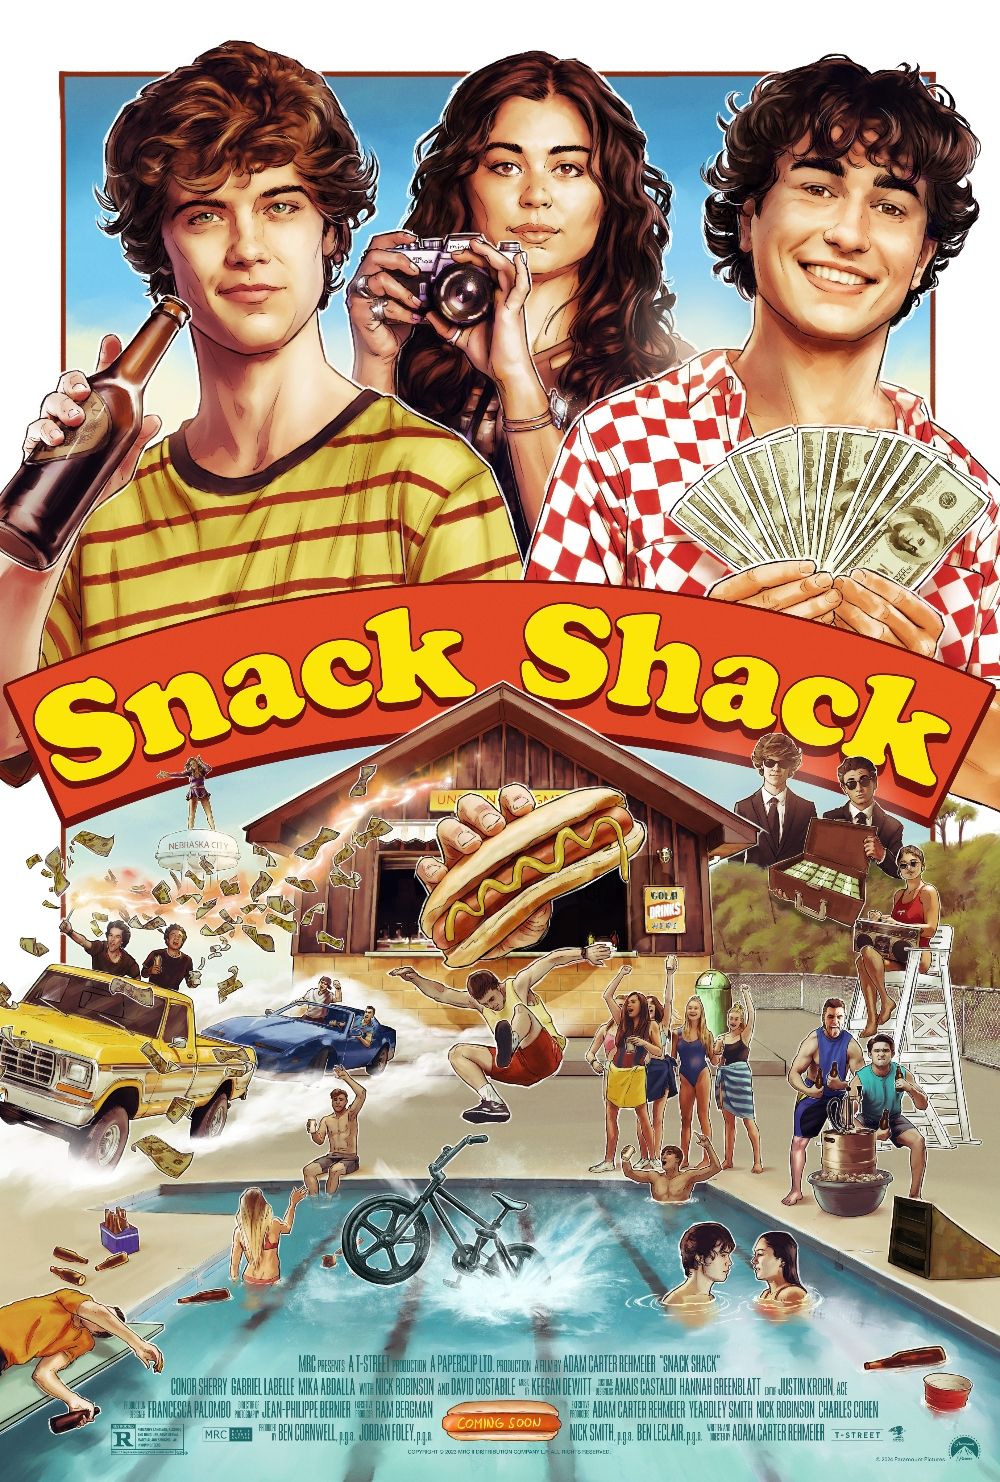 Snack Shack poster-1